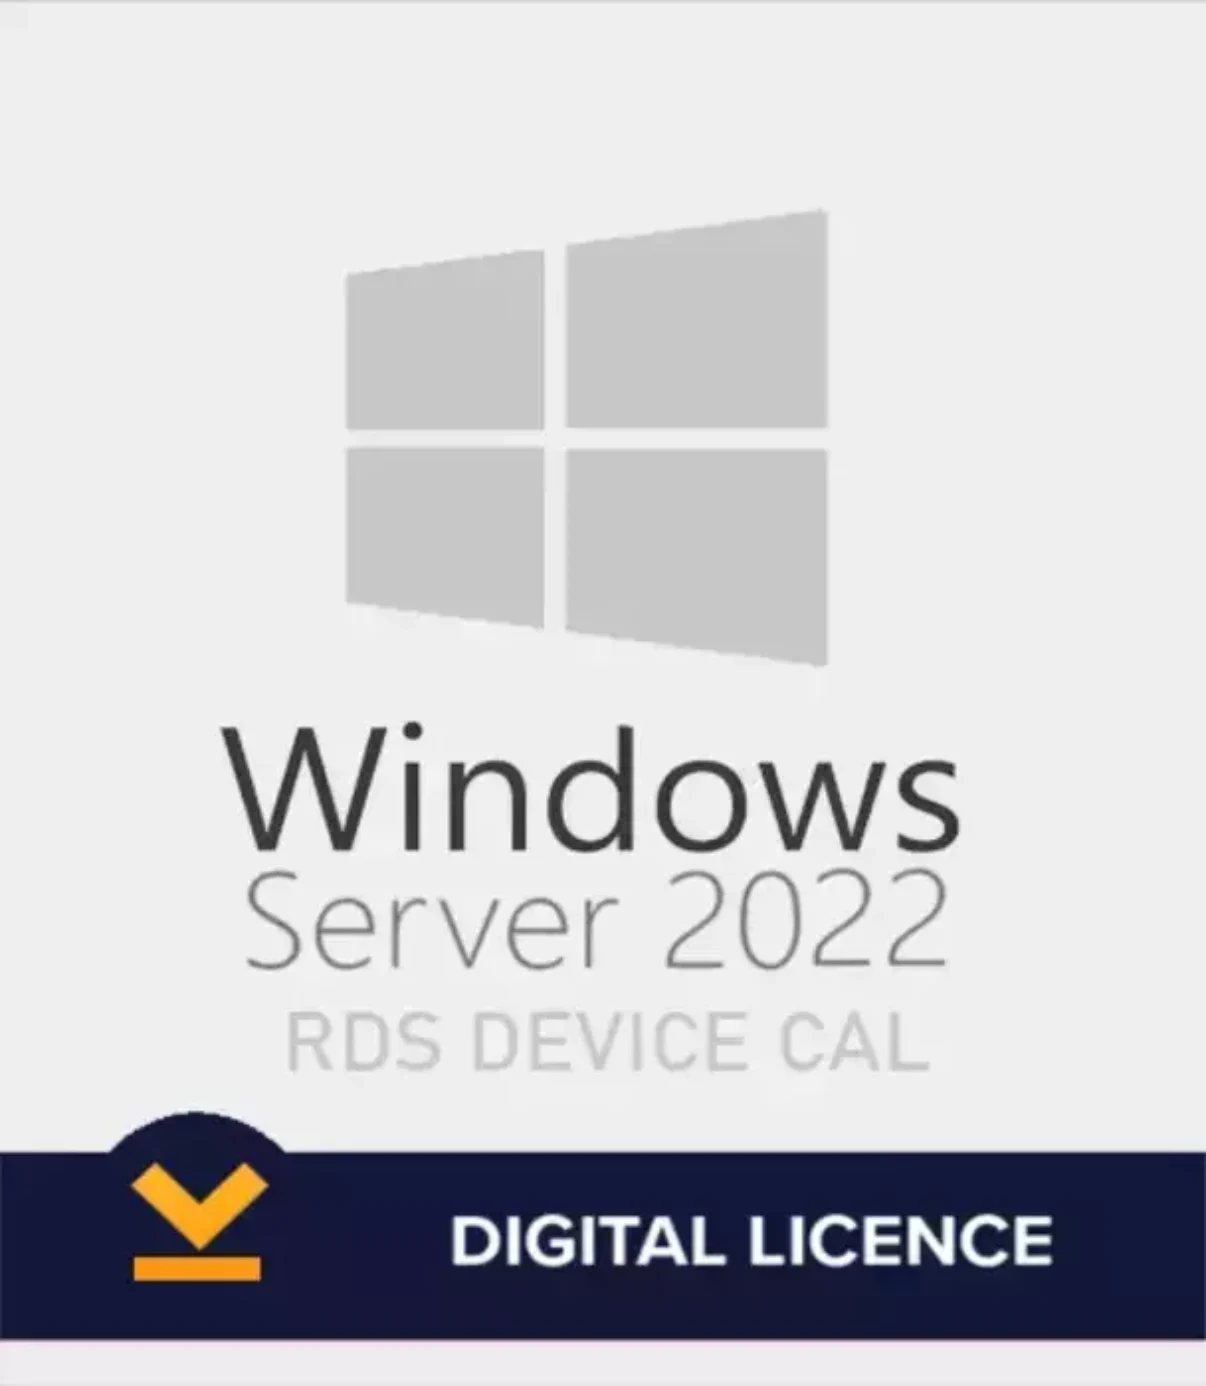 Windows server 2022 rds device cal